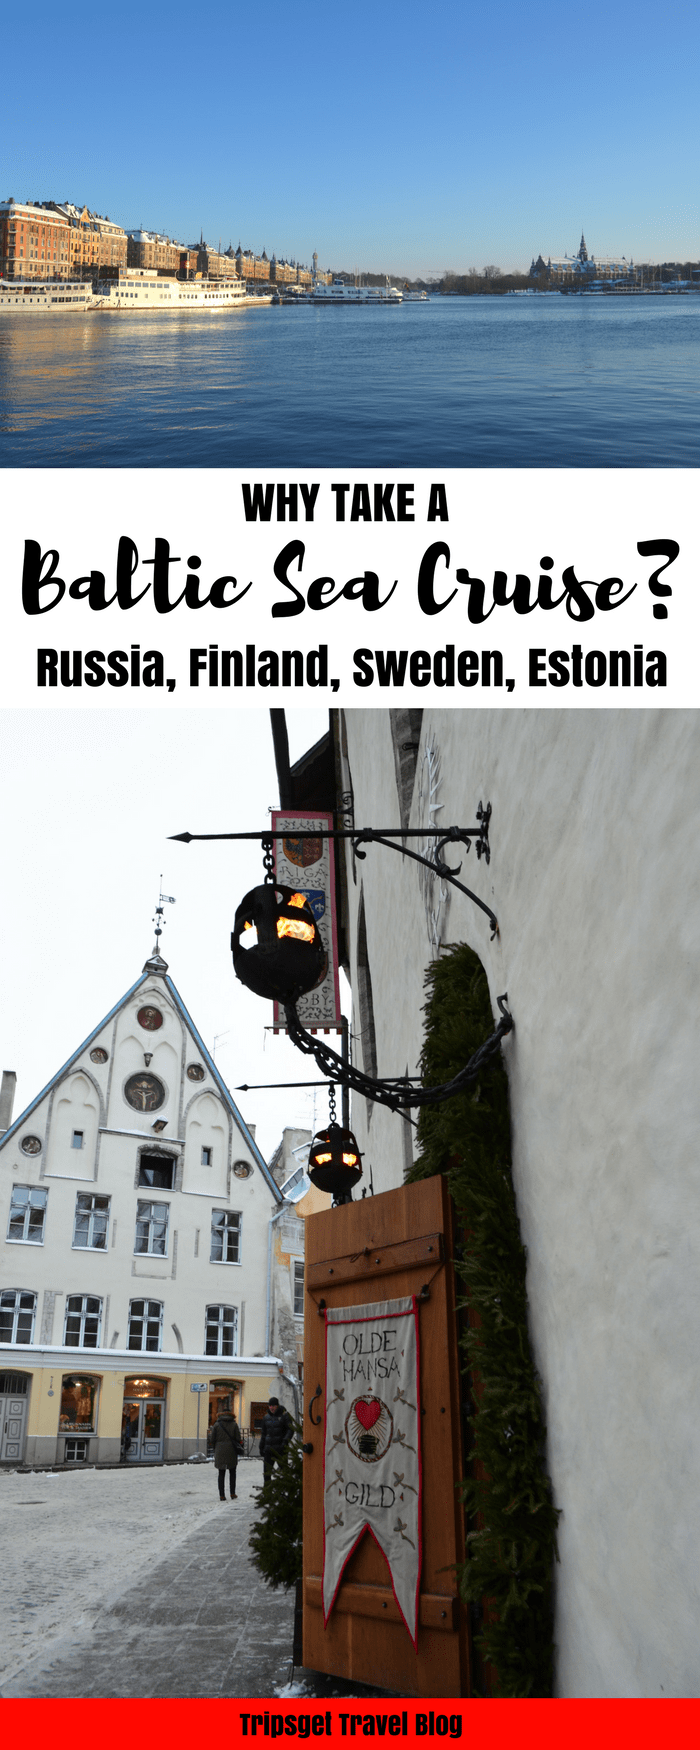 Baltic Sea Cruise, Scandinavian Cruise, Sweden, Russia, Finland, Estonia. St. Petersburg, Helsinki, Tallinn, Stockholm